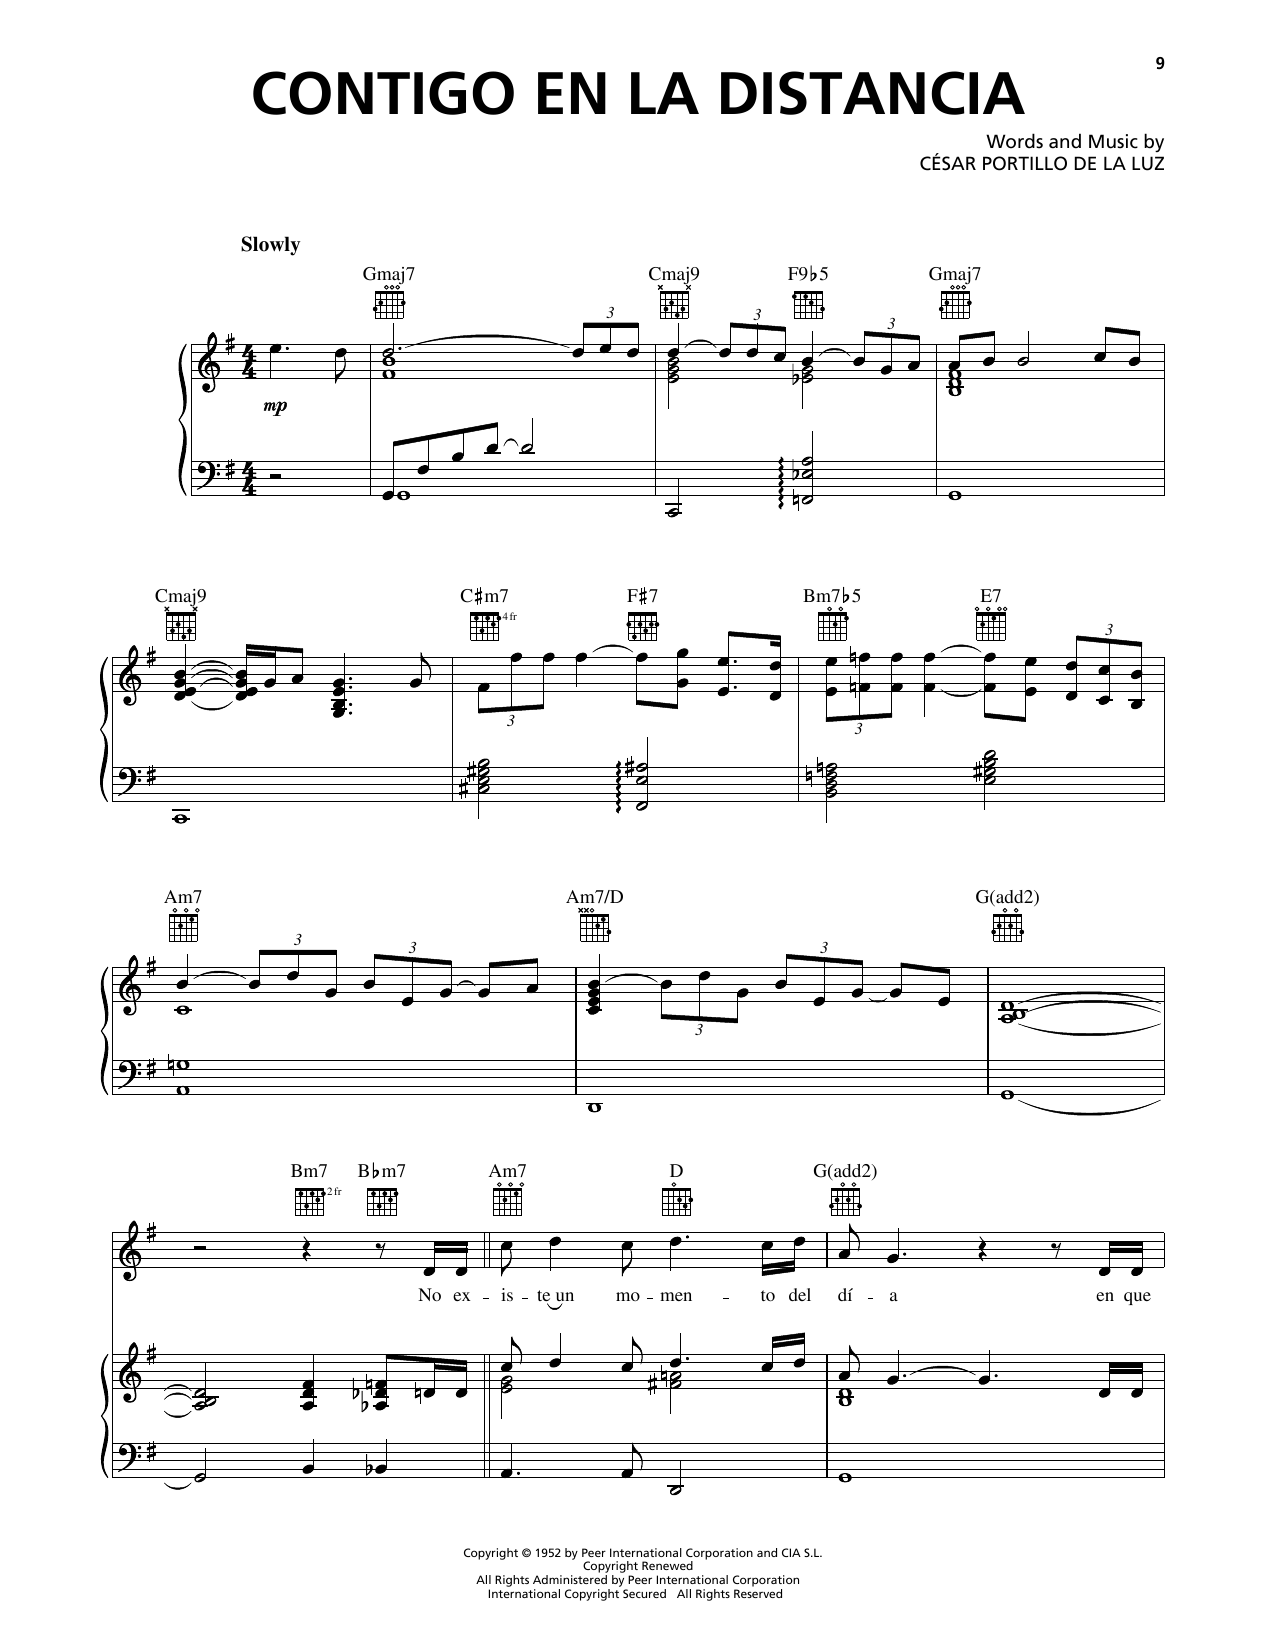 Luis Miguel Contigo En La Distancia Sheet Music Notes & Chords for Piano, Vocal & Guitar Chords (Right-Hand Melody) - Download or Print PDF